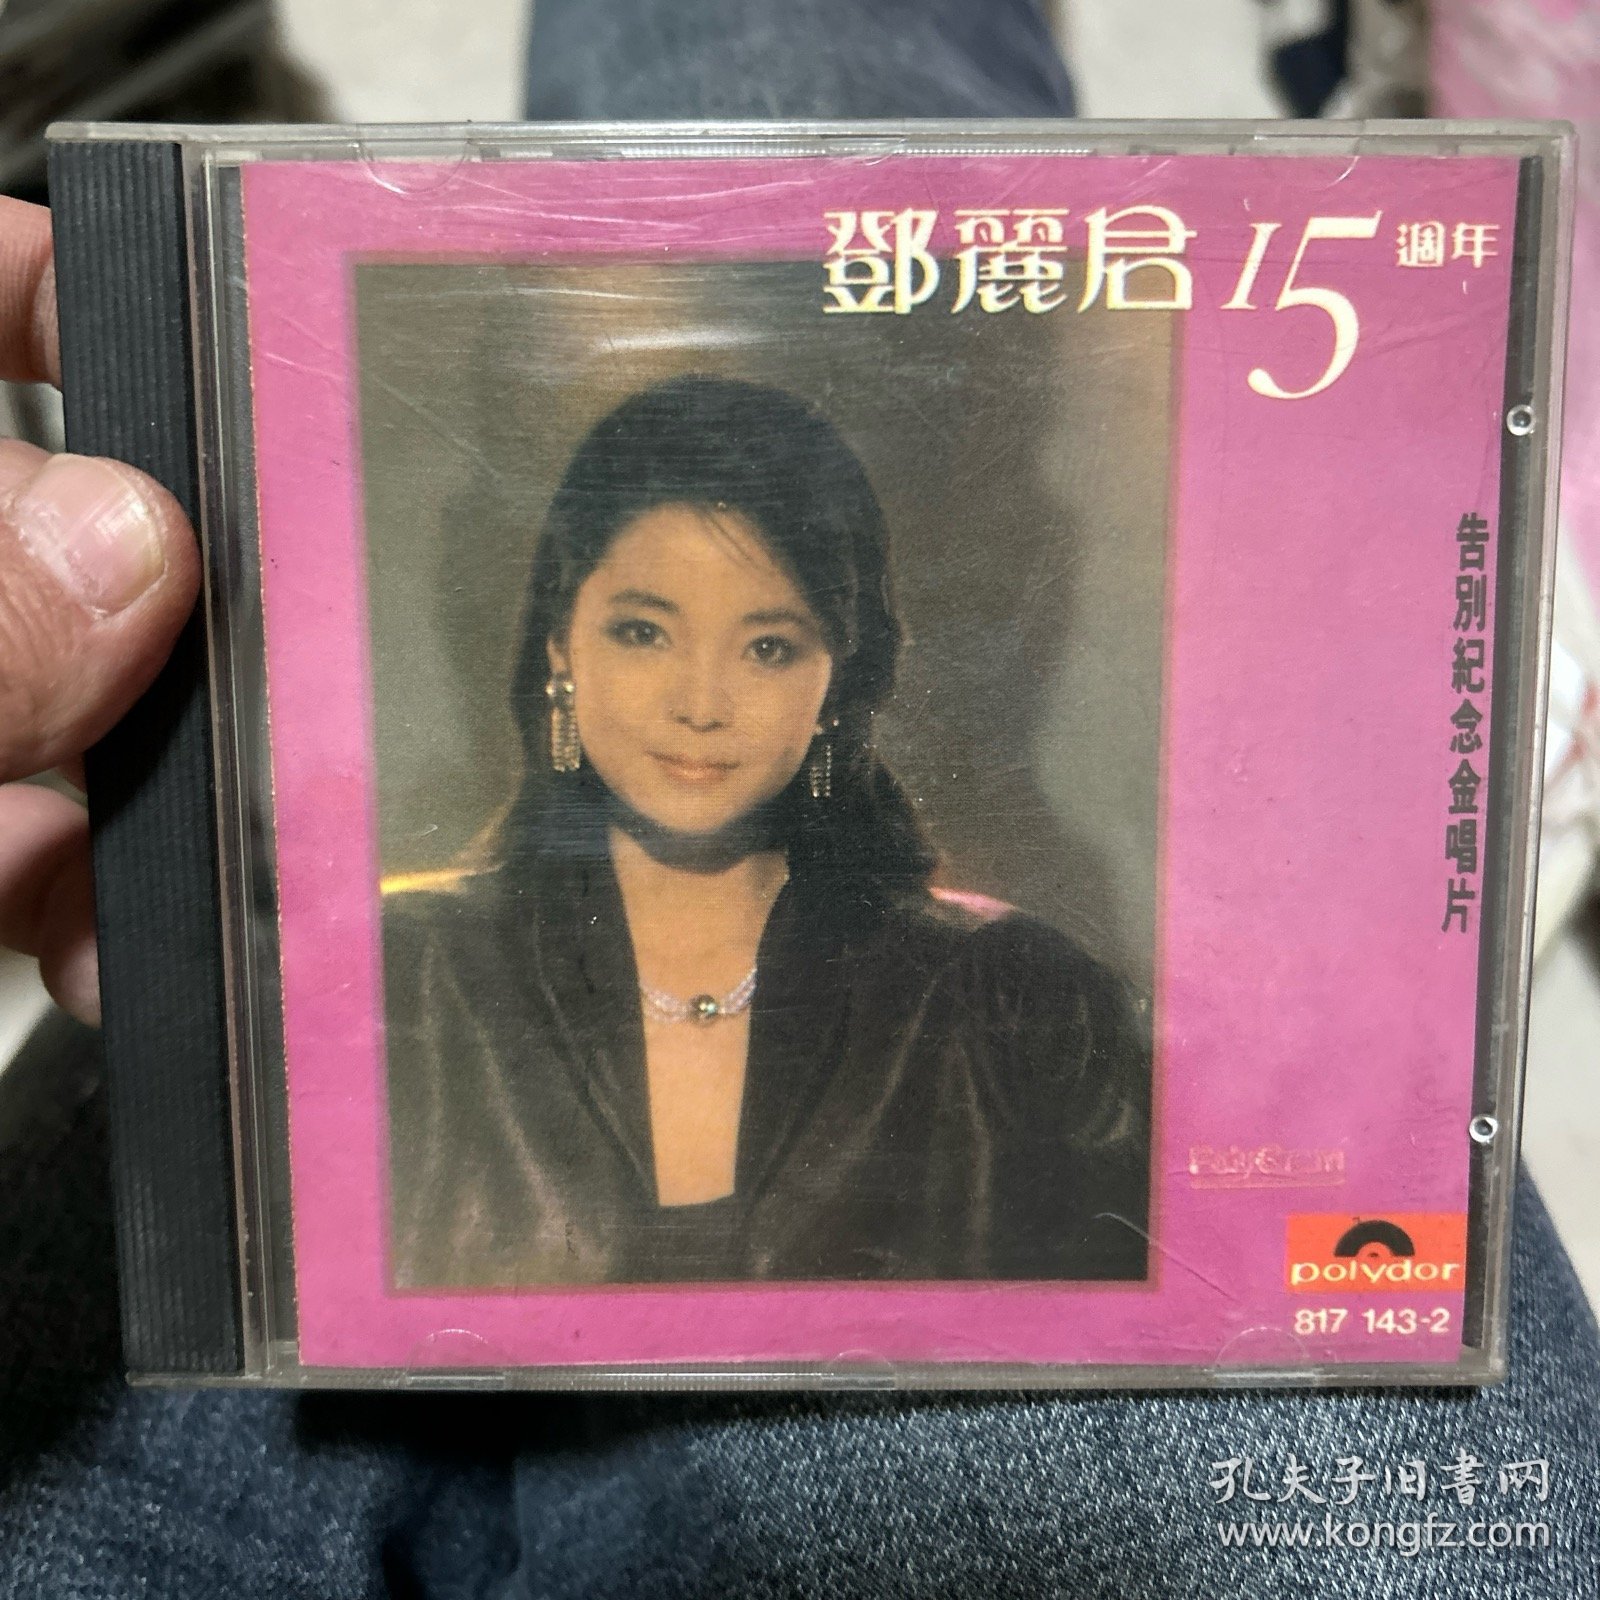 CD:邓丽君15周年